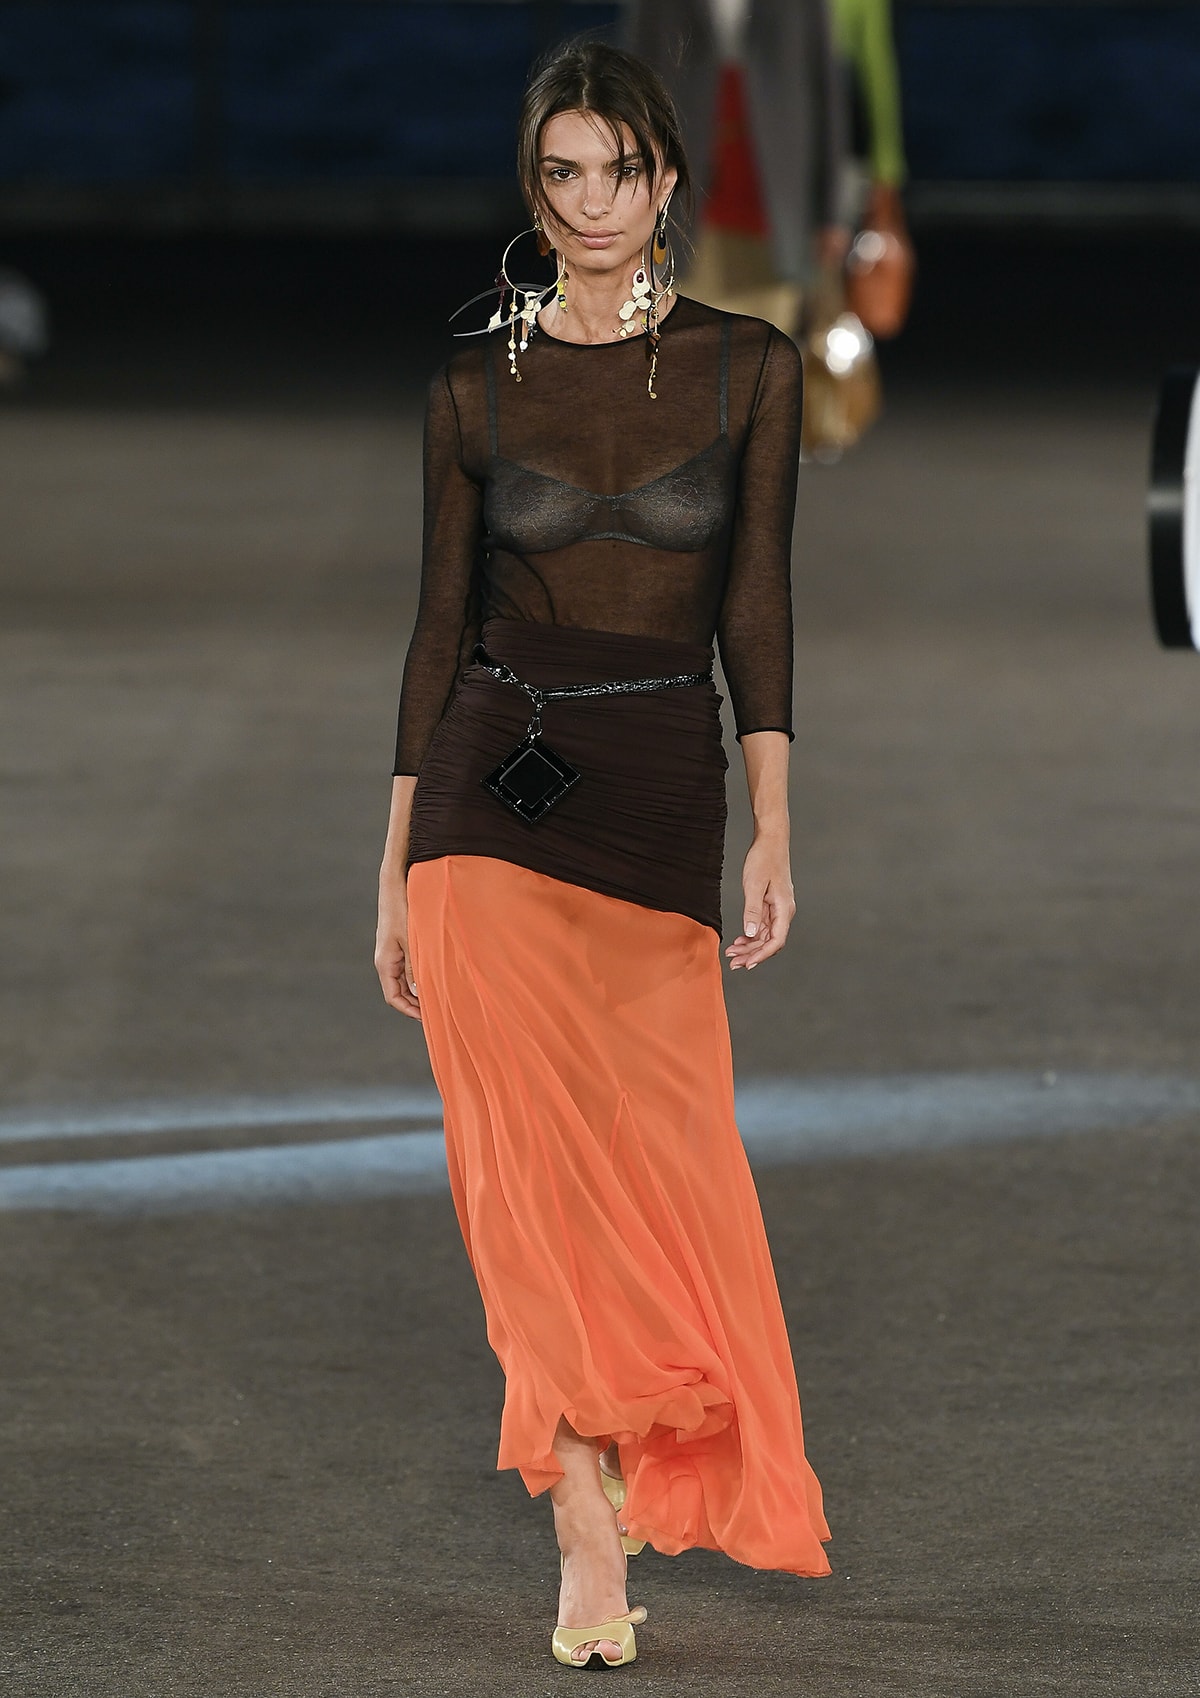 Emily Ratajkowski bares her boobs as she walks for Tory Burch during New York Fashion Week on September 13, 2022